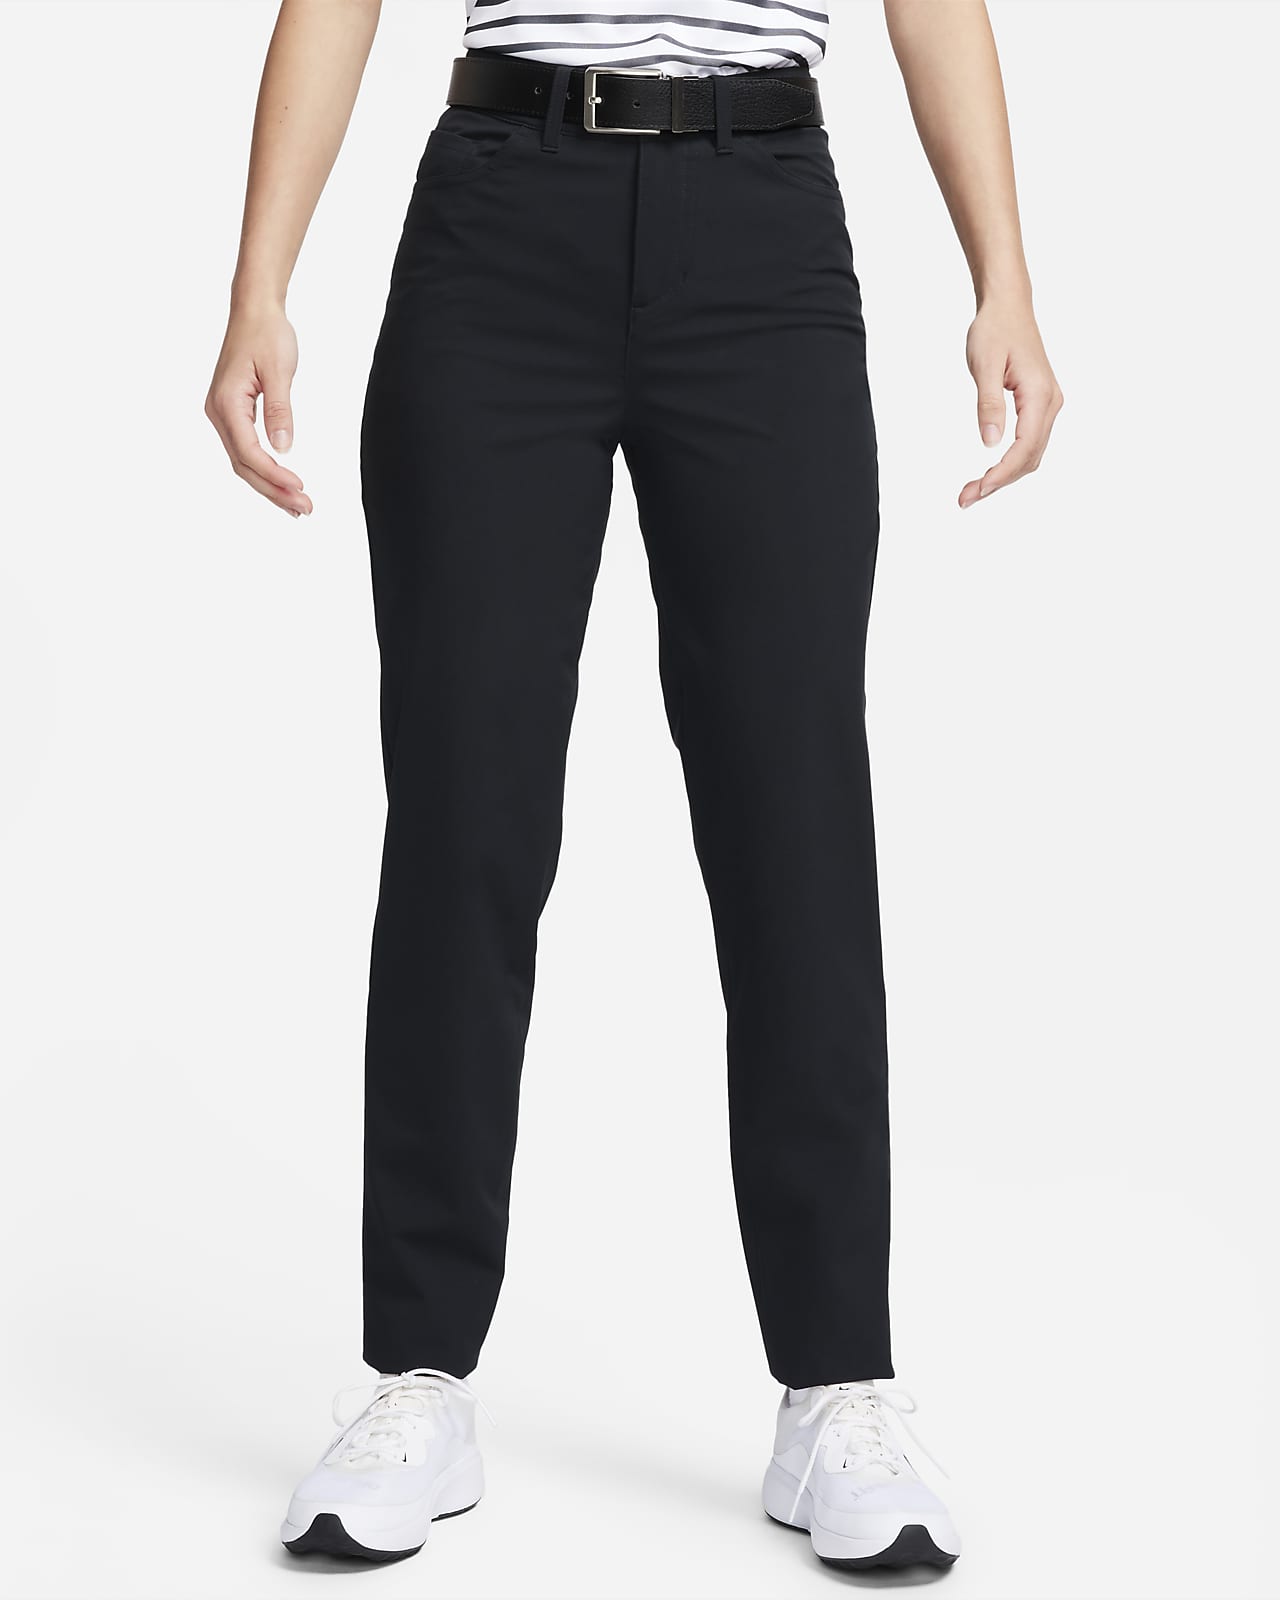 Rohnisch Ladies Slim-Fit Pull-On Black Golf Trousers – GolfGarb